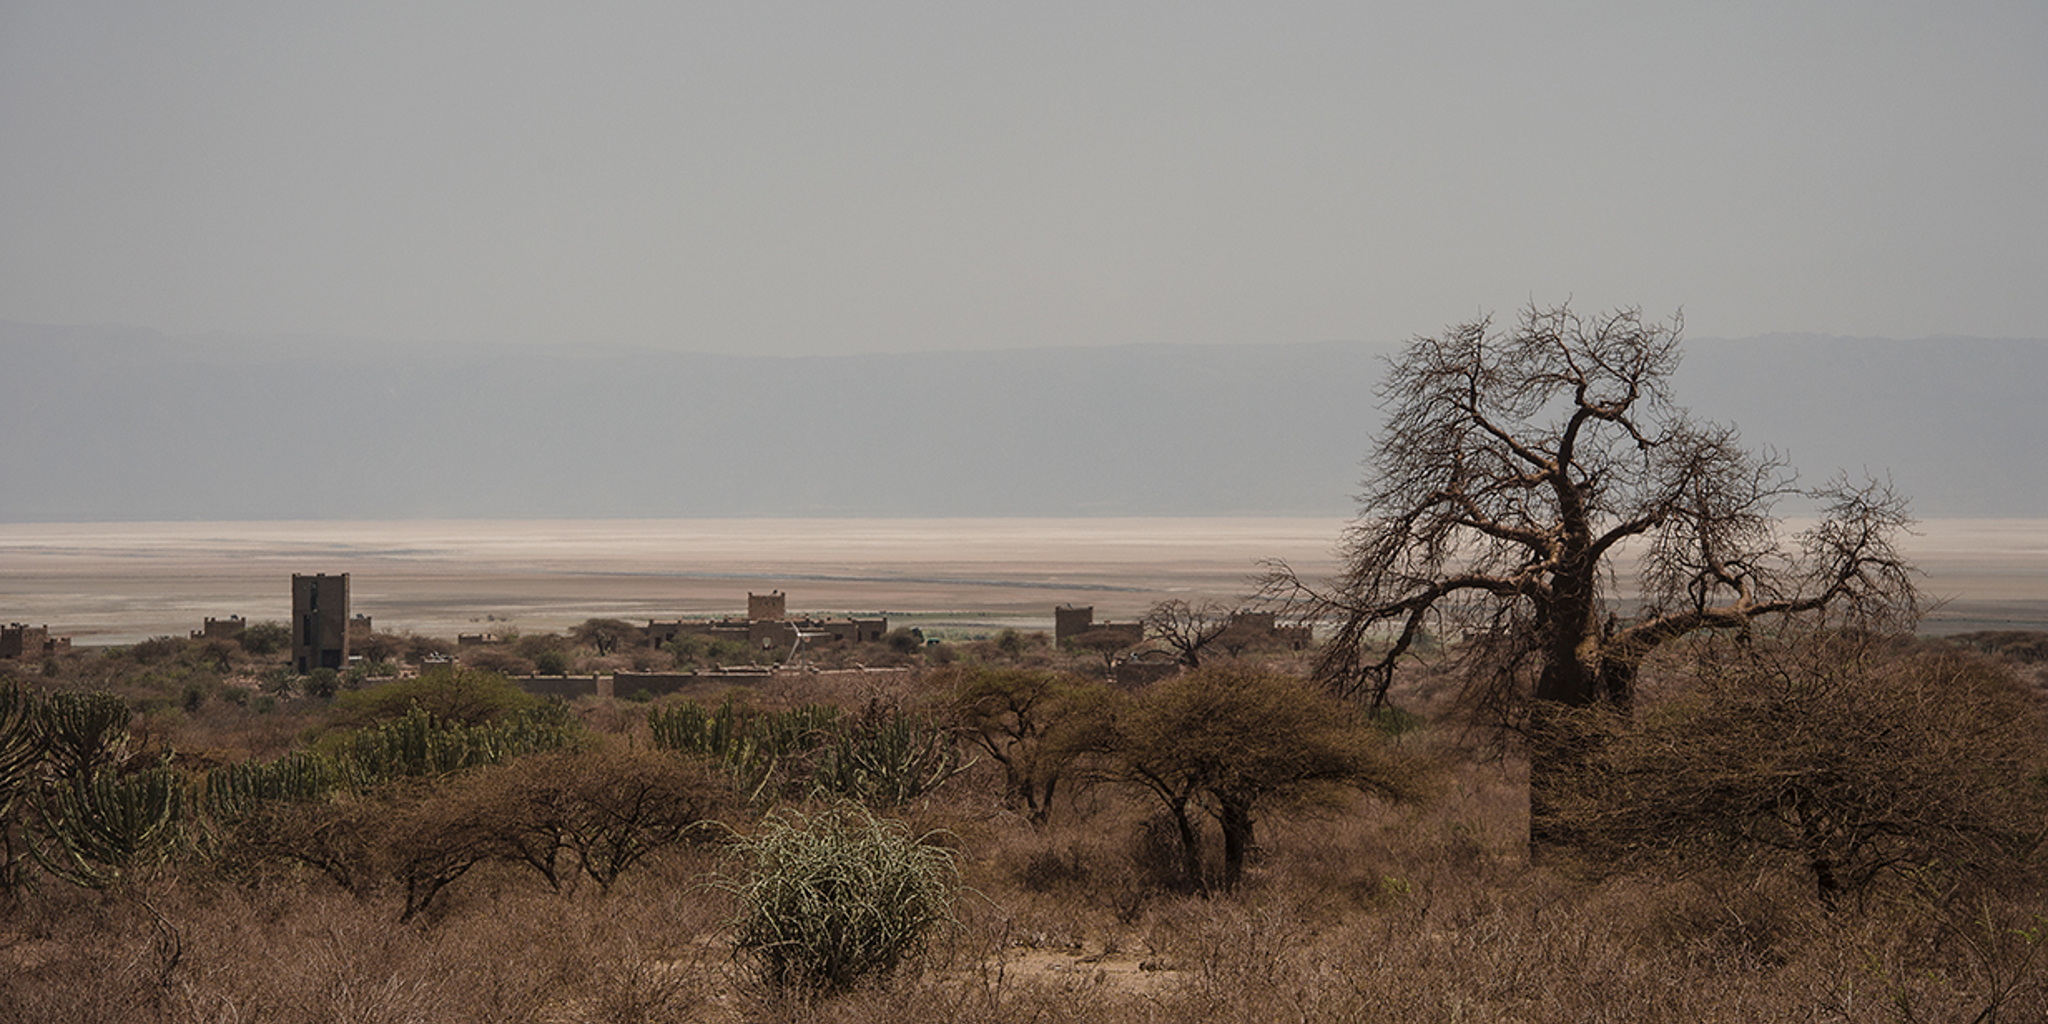 Views of Lake Eyasi in Tanzania